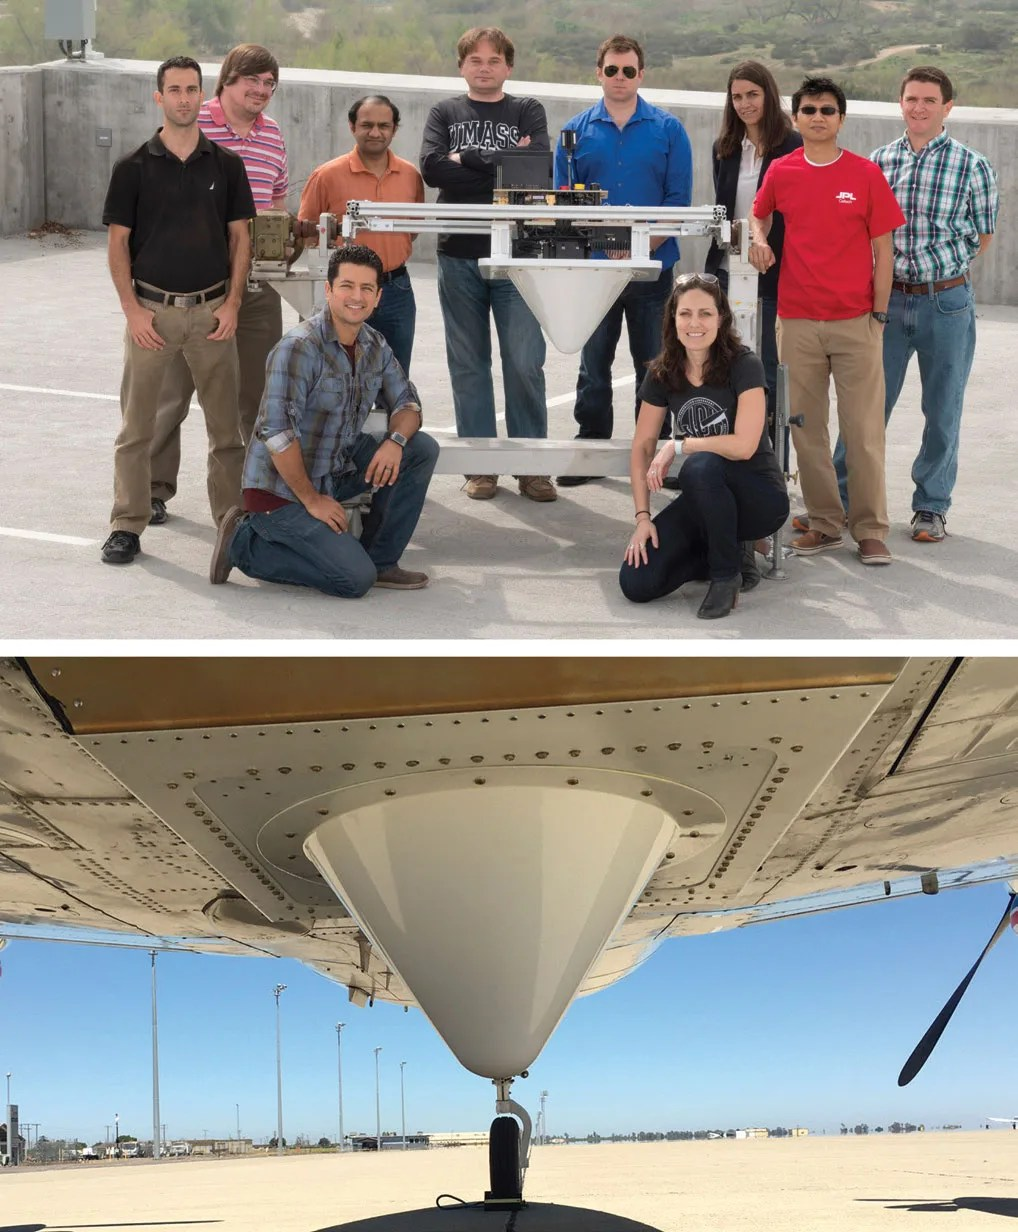 Photo of DopplerScatt team at JPL and Photo of DopplerScatt aboard an aircraft